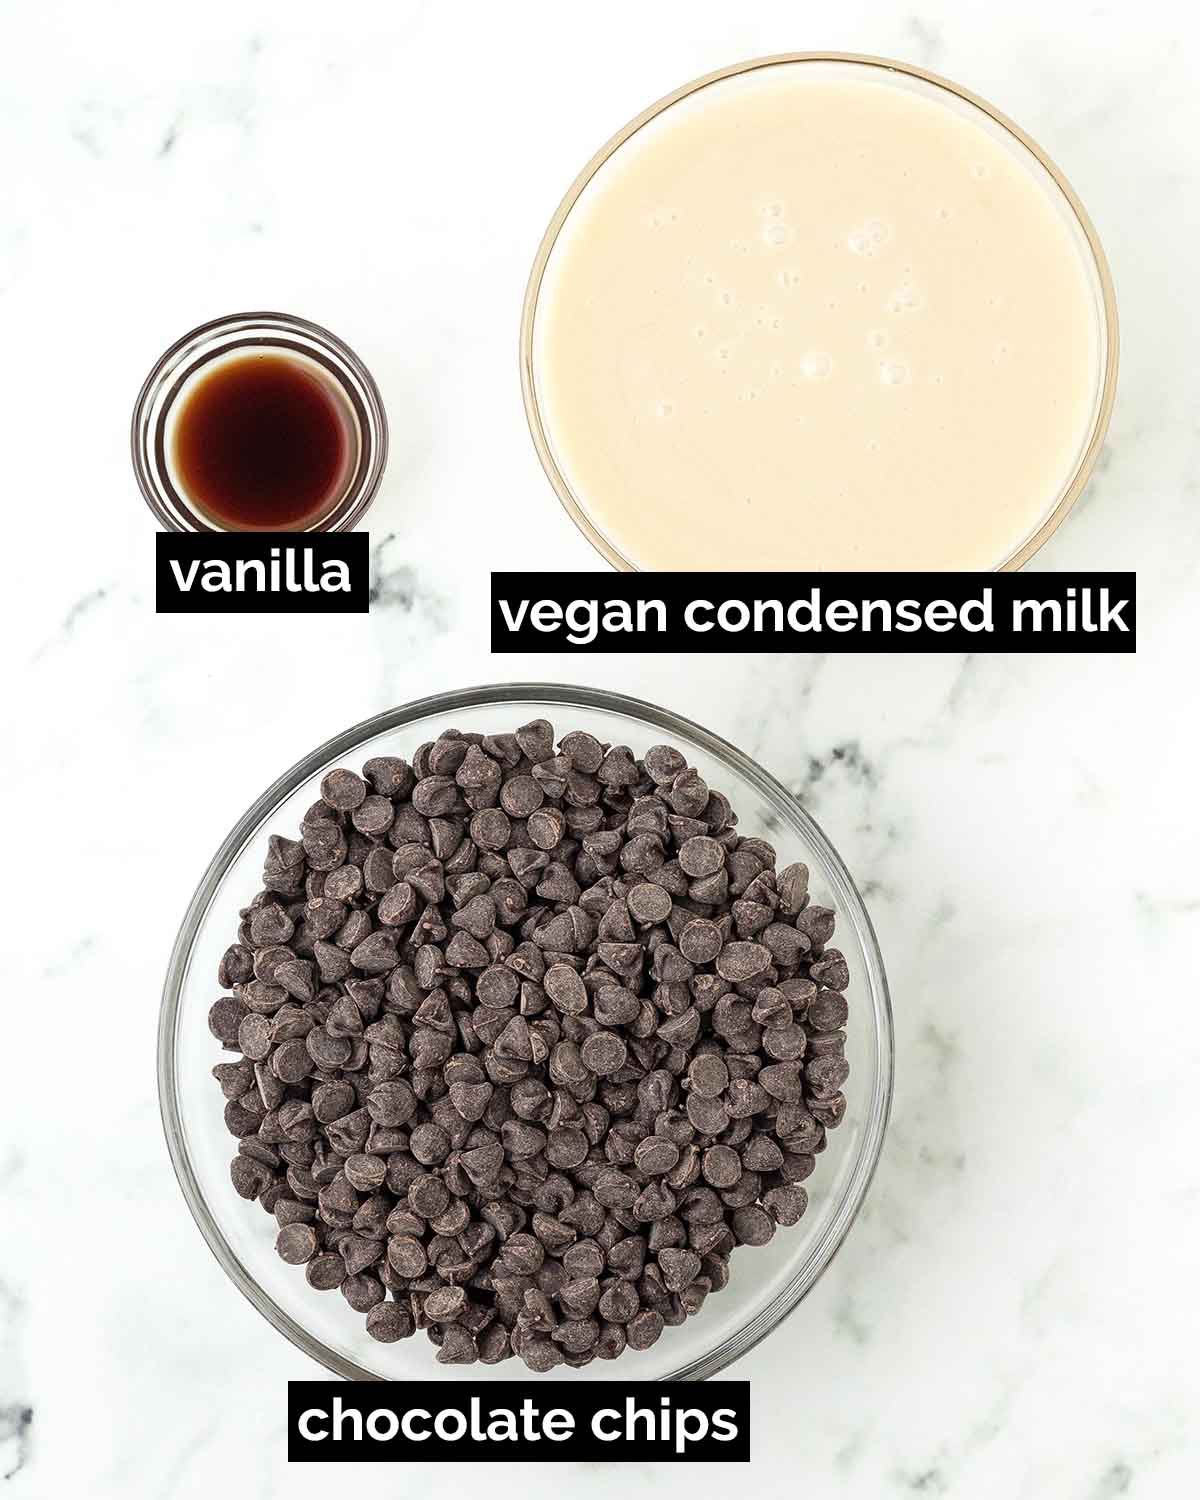 An overhead shot showing the ingredients needed to make vegan fudge.